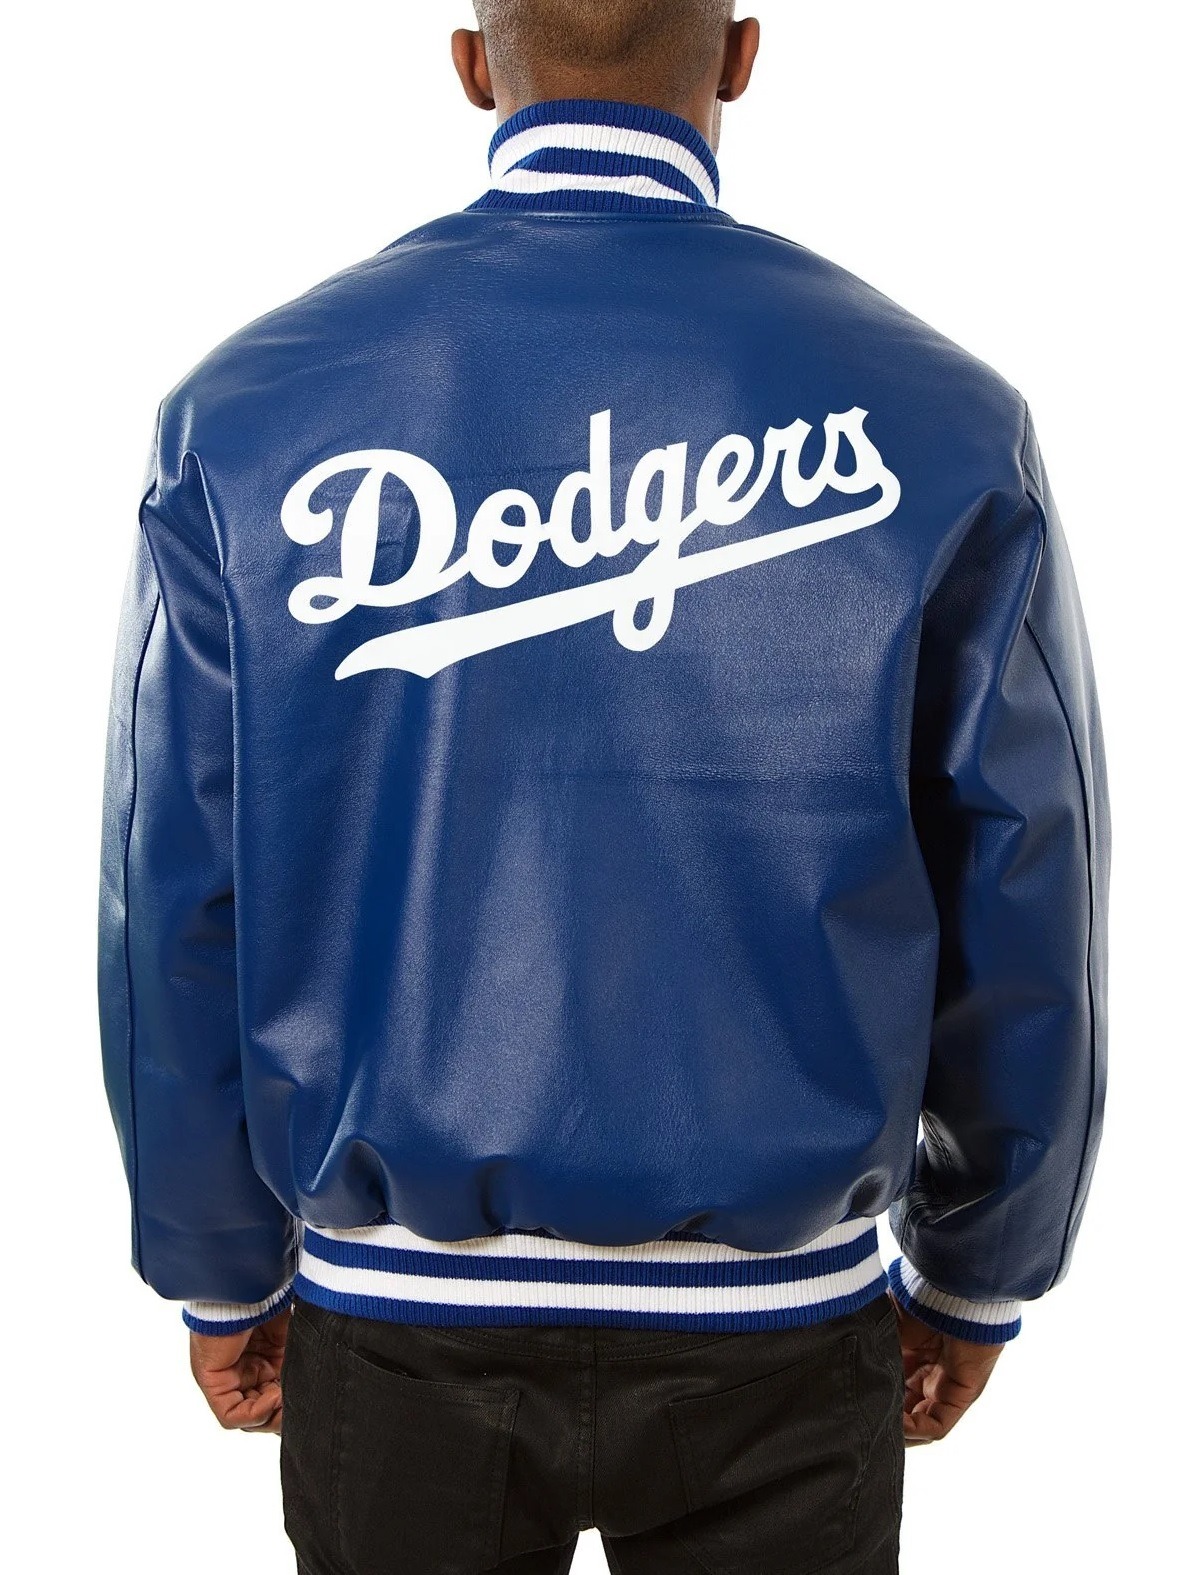 Dodgers Royal Blue Bomber Leather Jacket